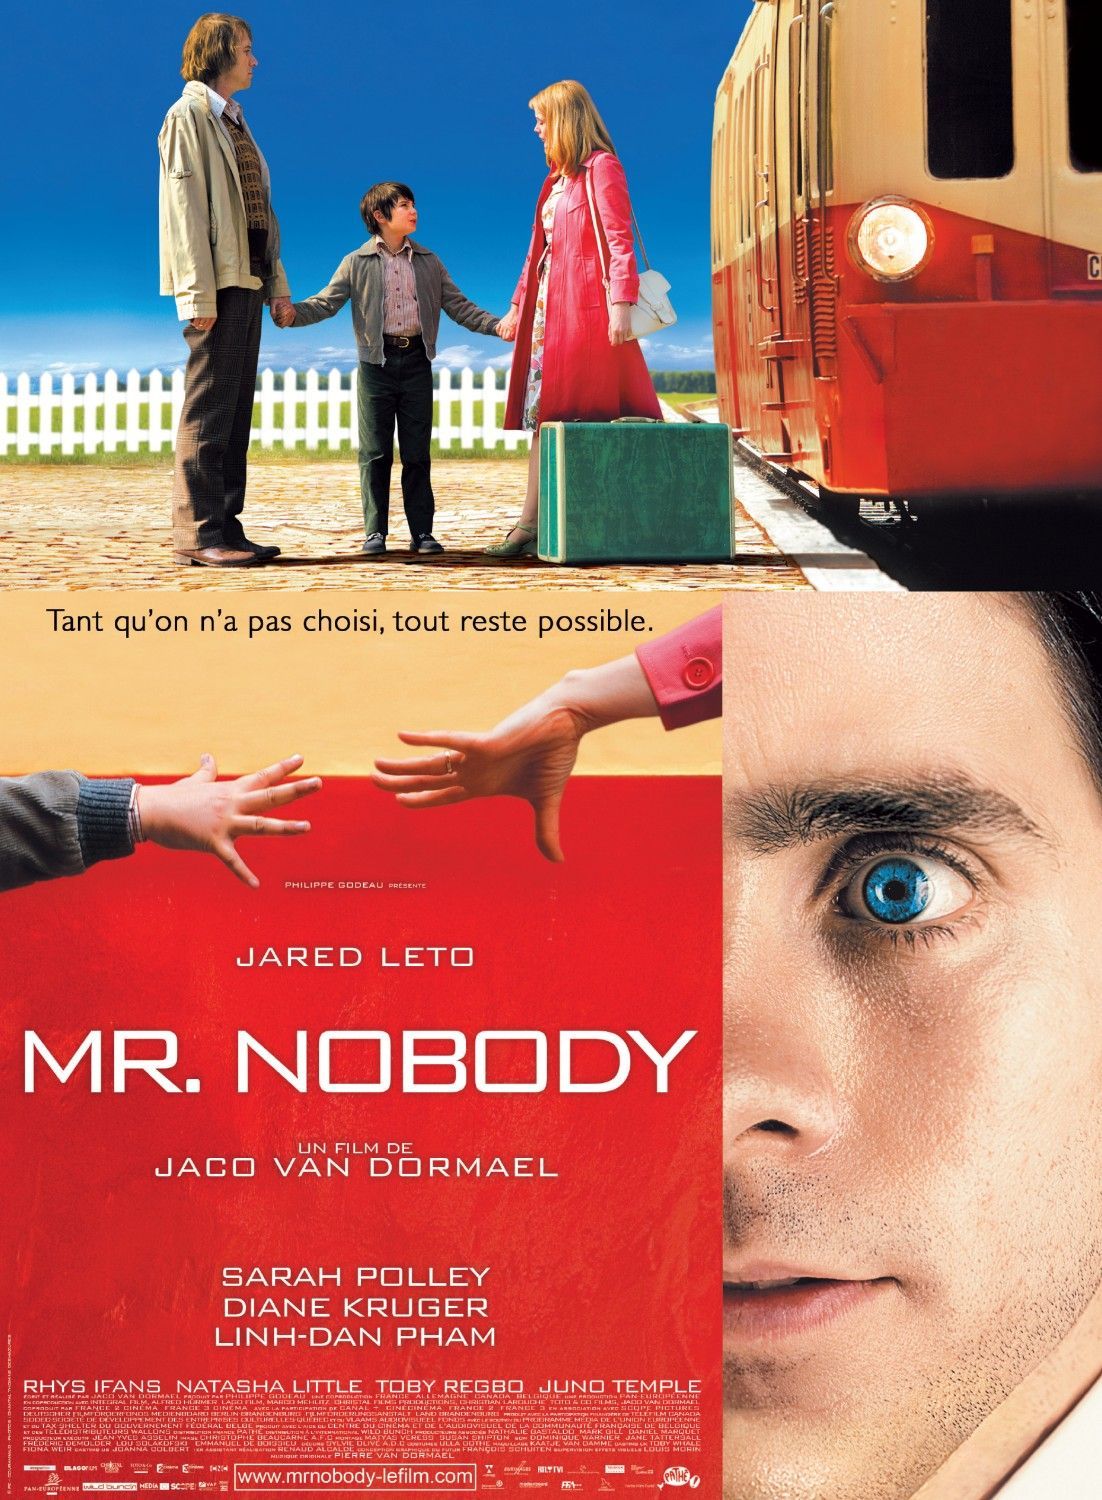 Watch Mr. Nobody (2009) Online Free Full Movie HD 123Movies